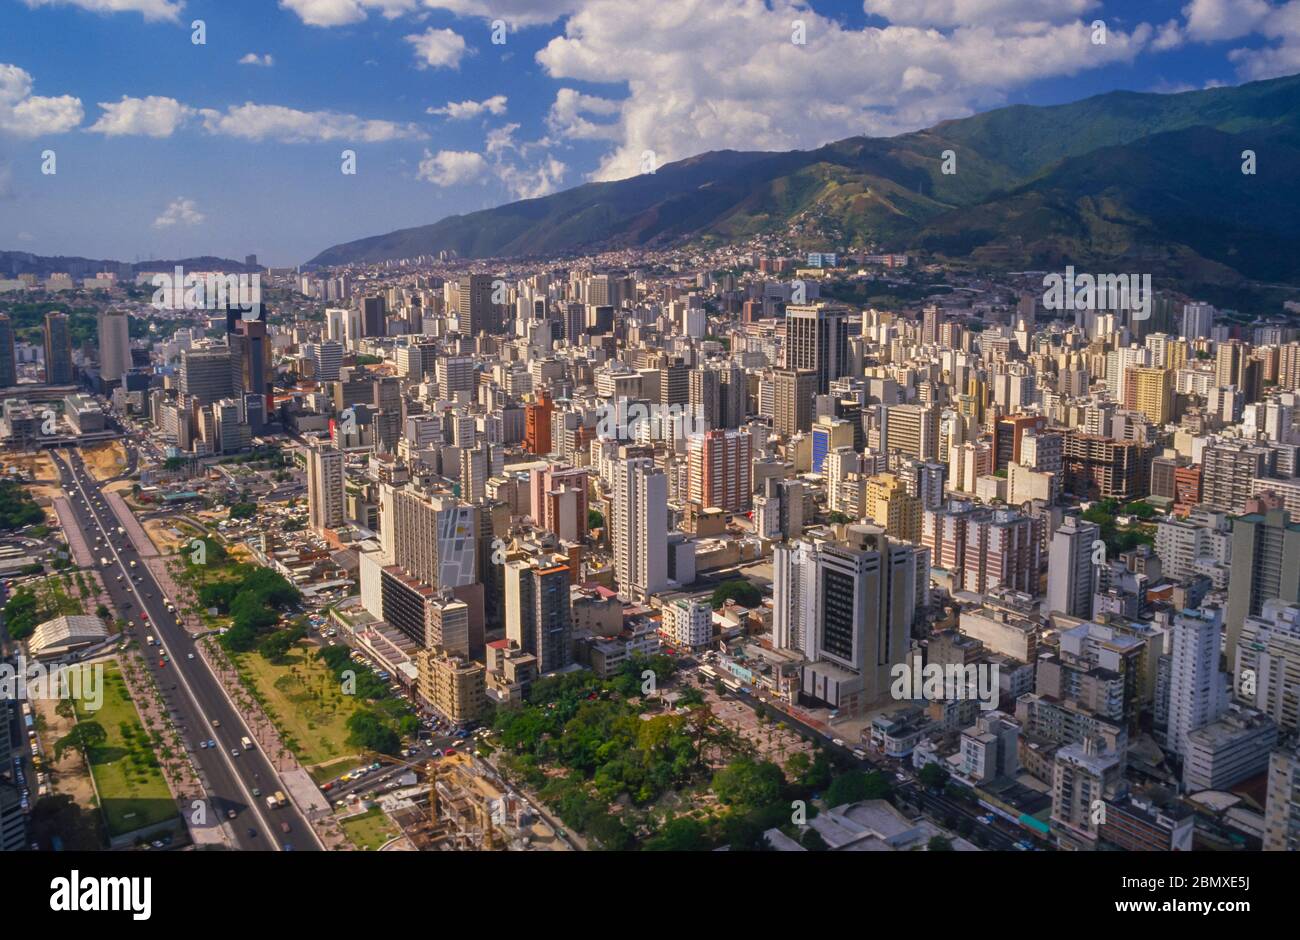 CARACAS, VENEZUELA - Aerial view of buildings in central Caracas in 1988. Stock Photo